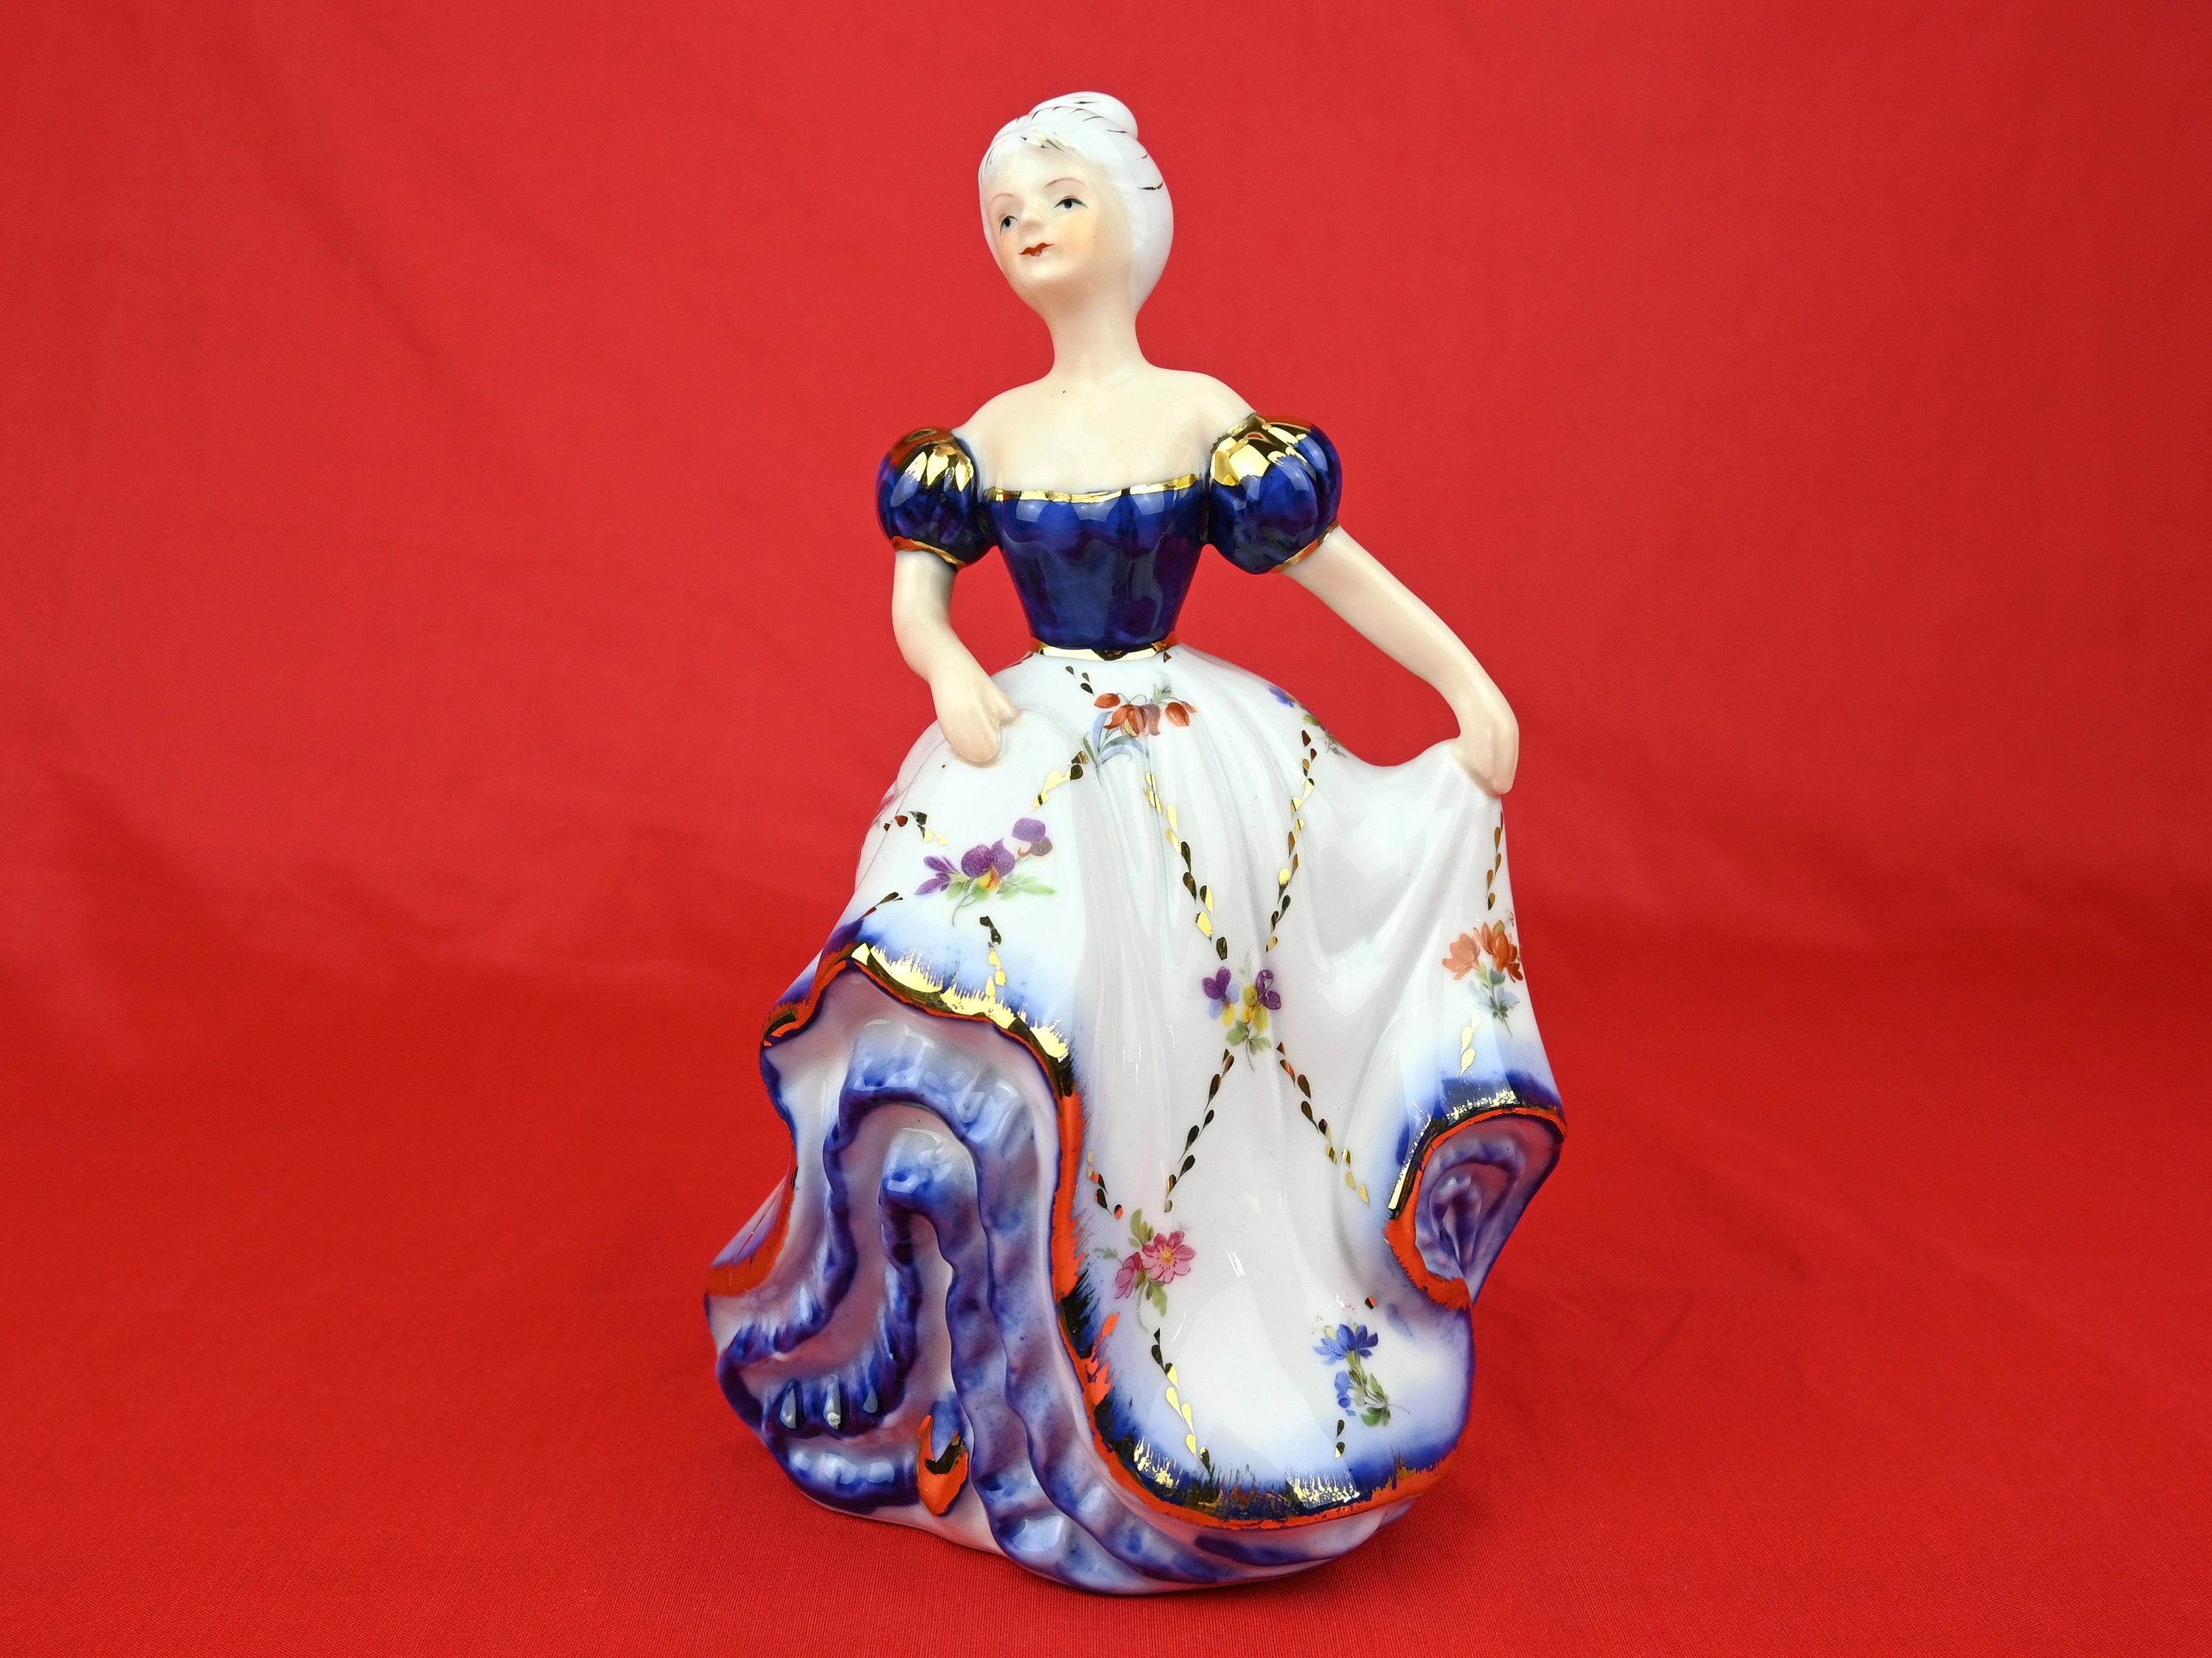 Blue Lady Figurine - Etsy